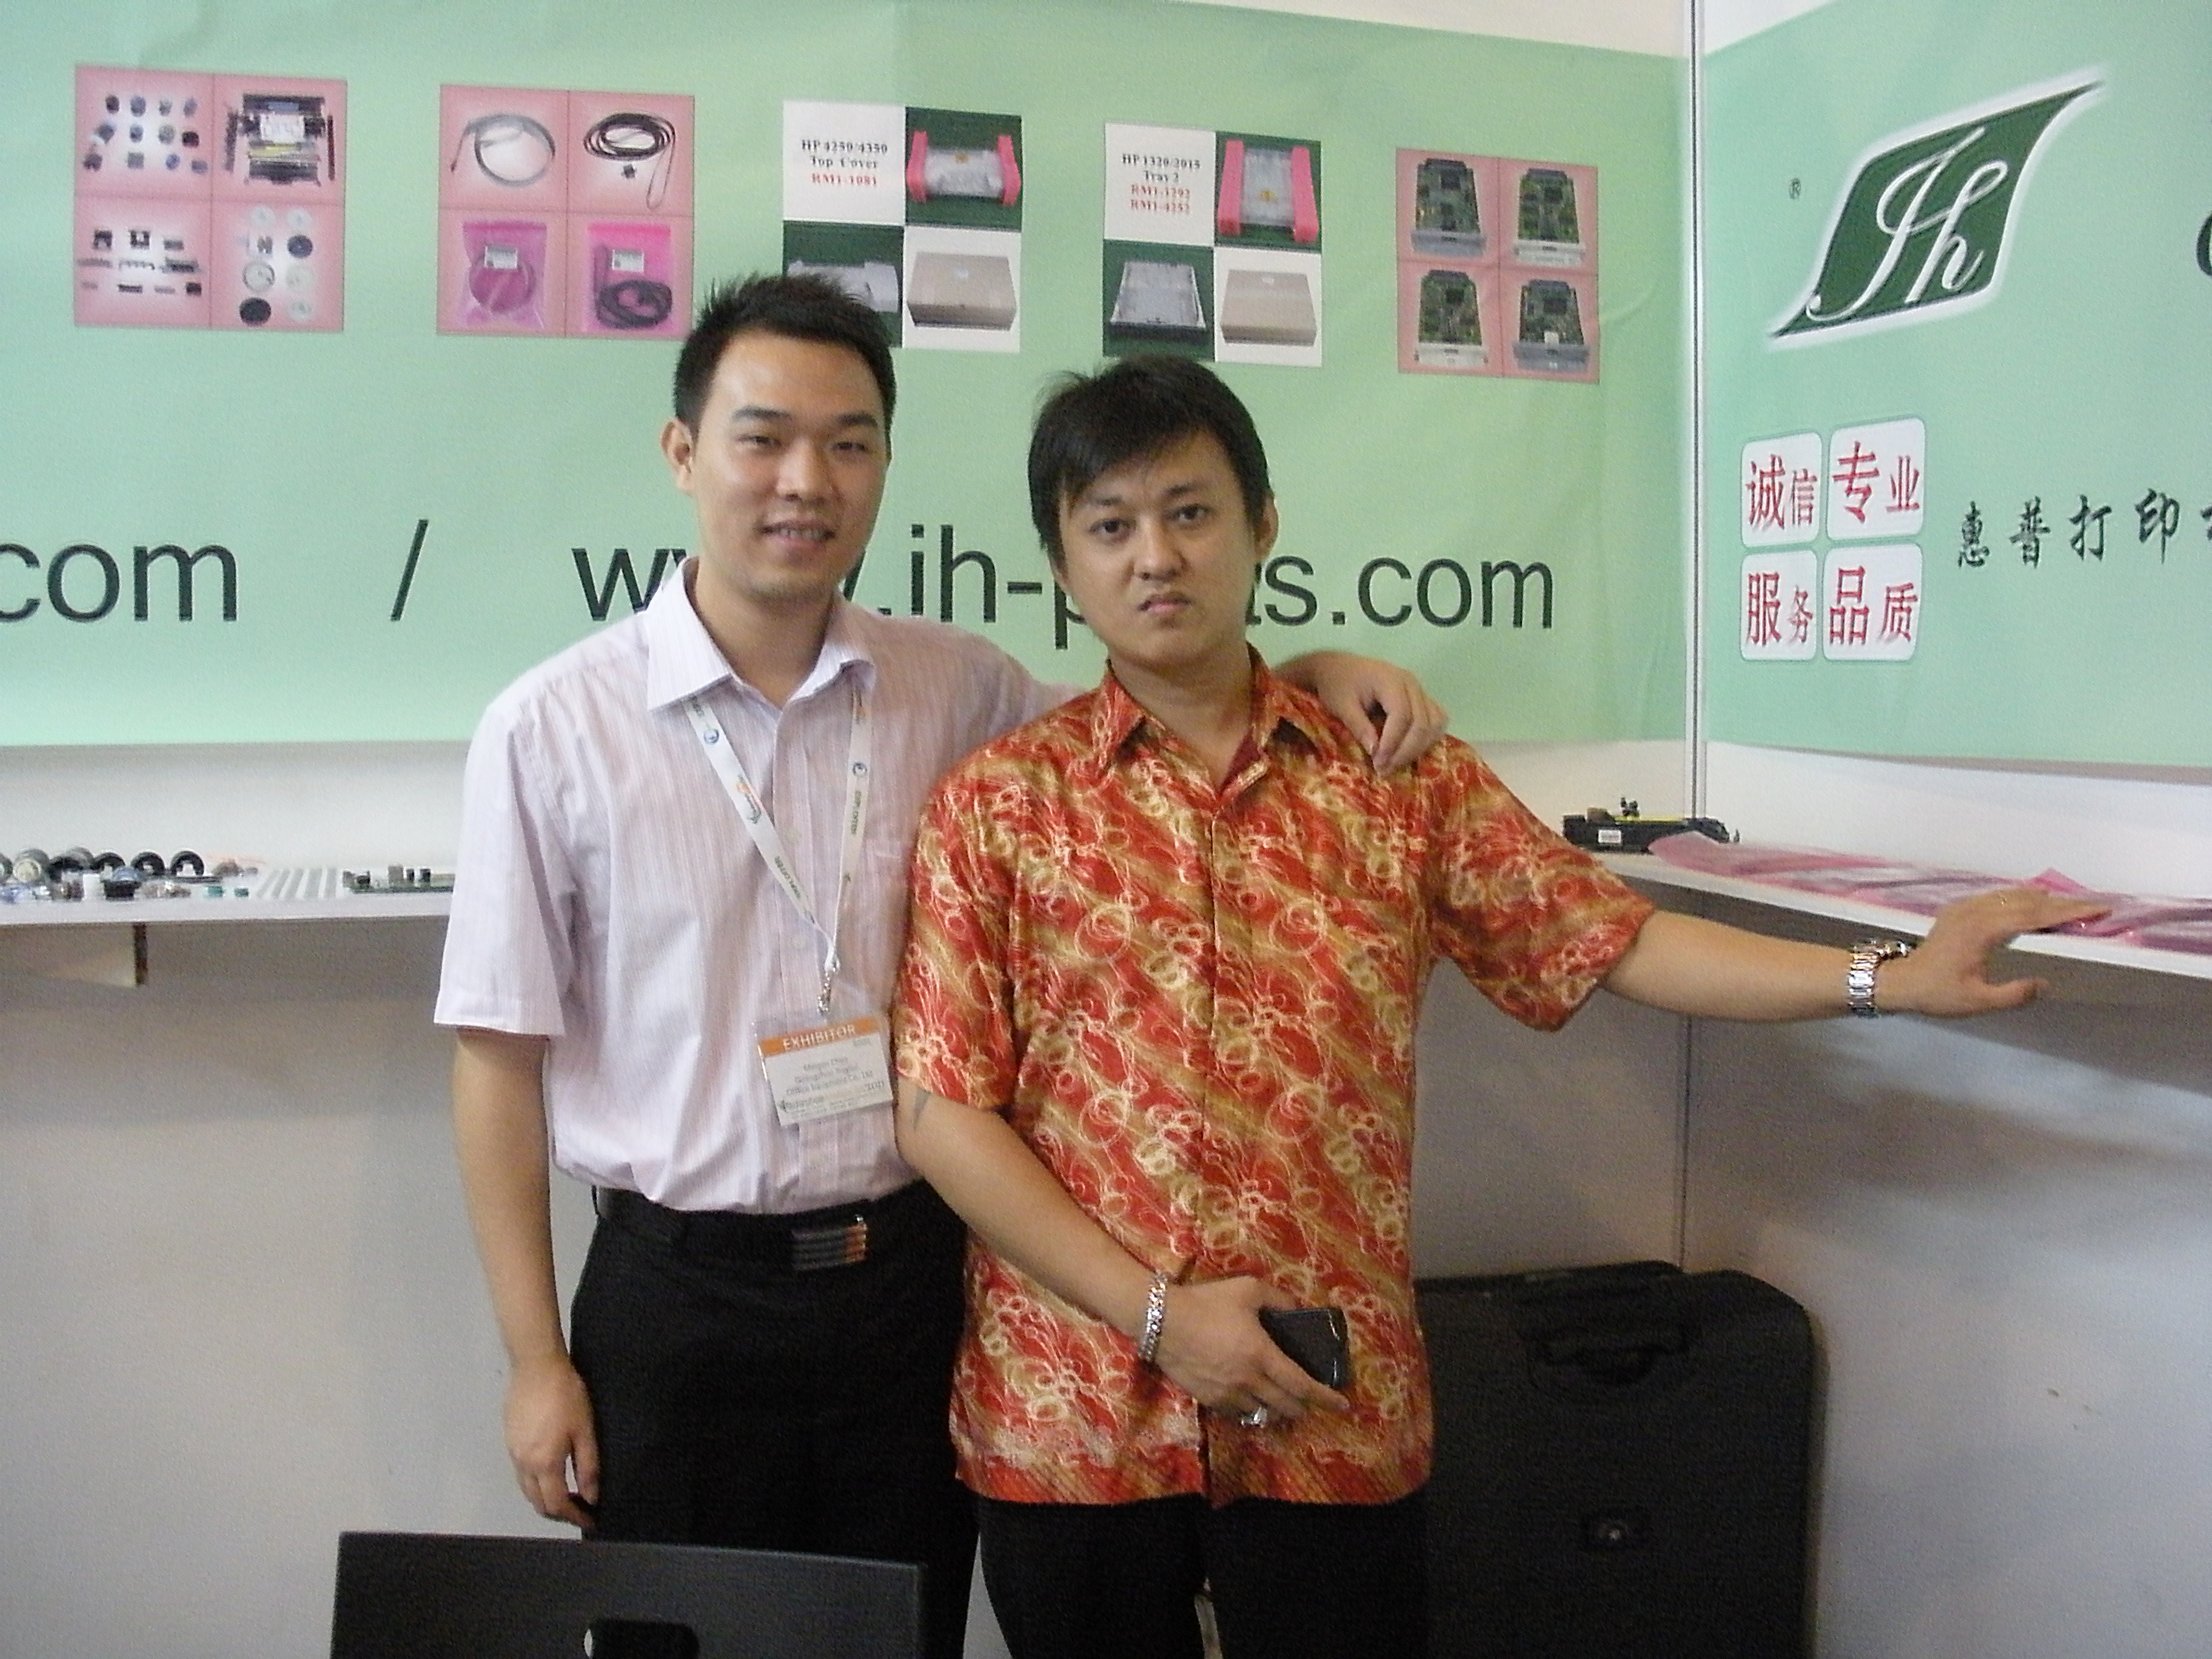 Guangzhou Jinghui Printer Parts RechargExpo South East 2011 in Indonesia